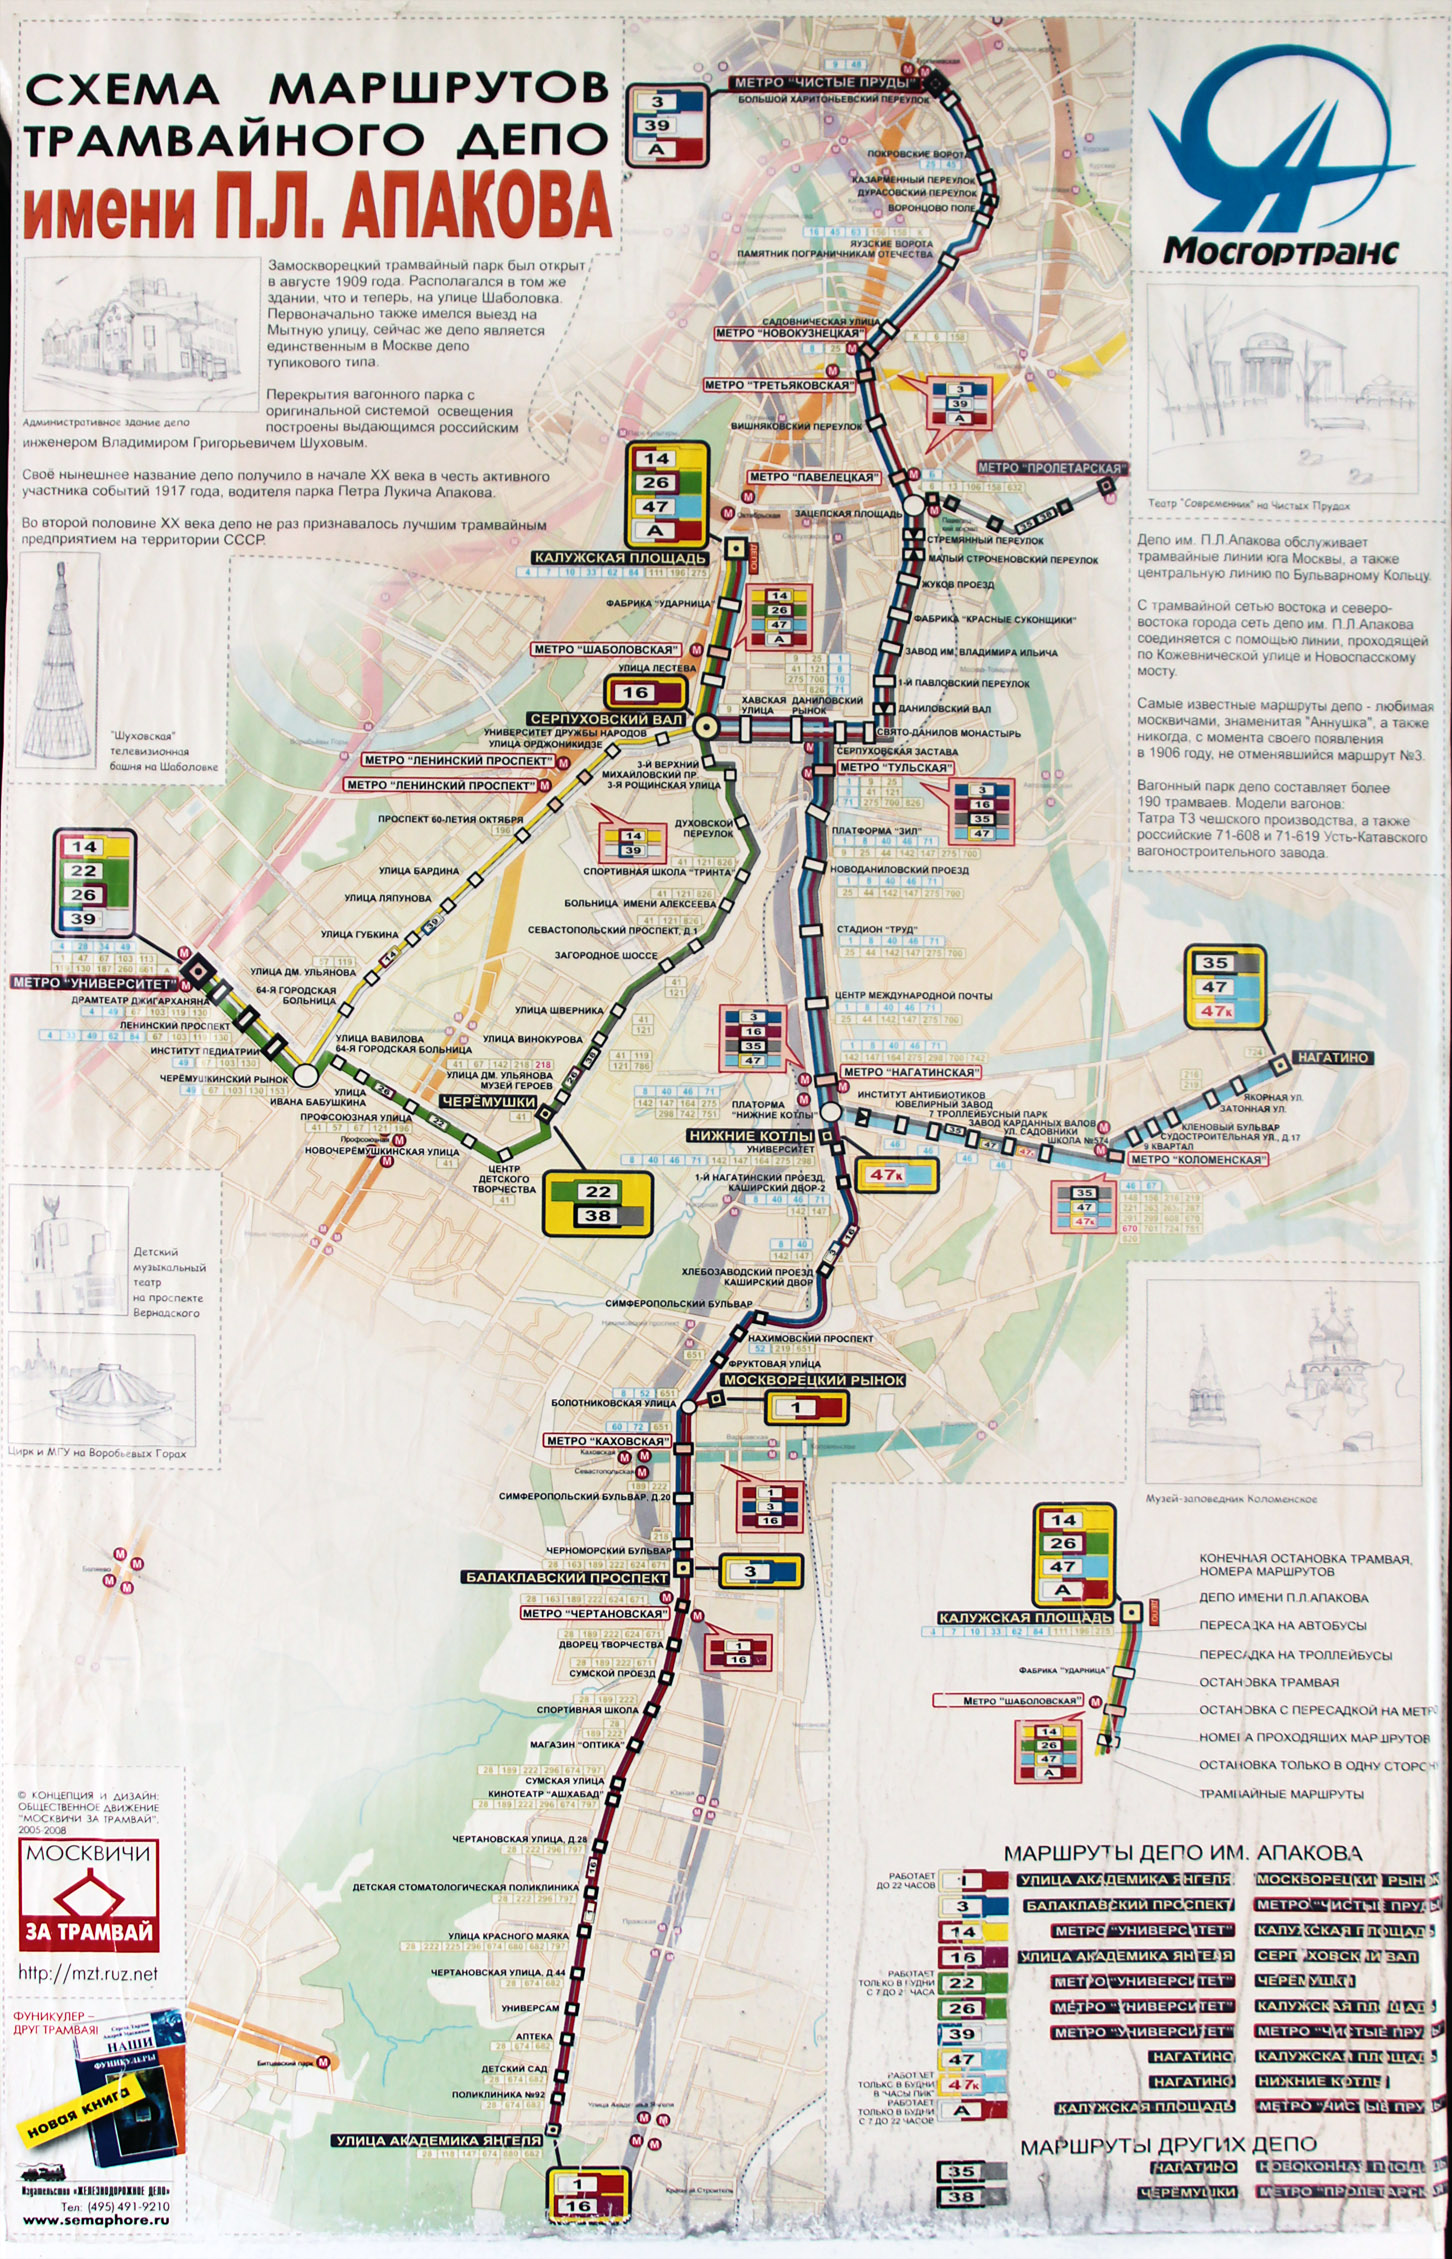 Moscova — Maps inside vehicles (tram)